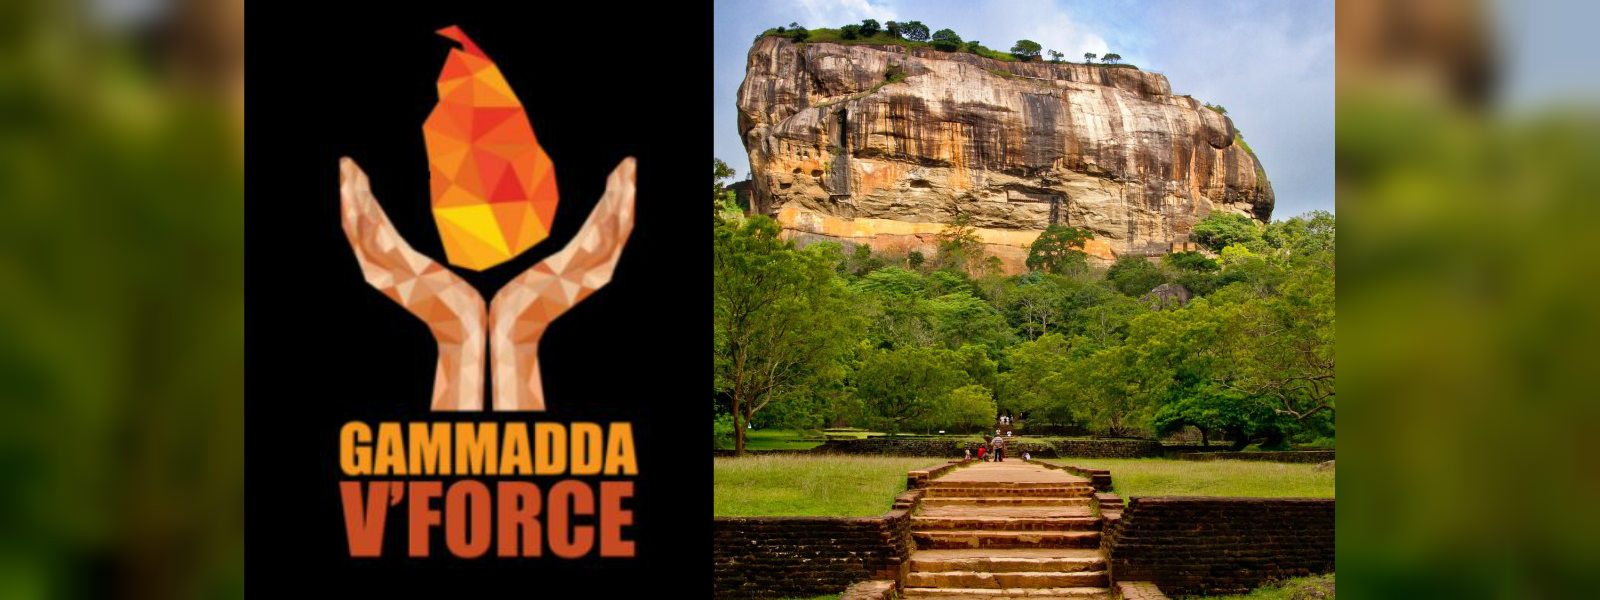 Gammadda V-force begins from Sigiriya